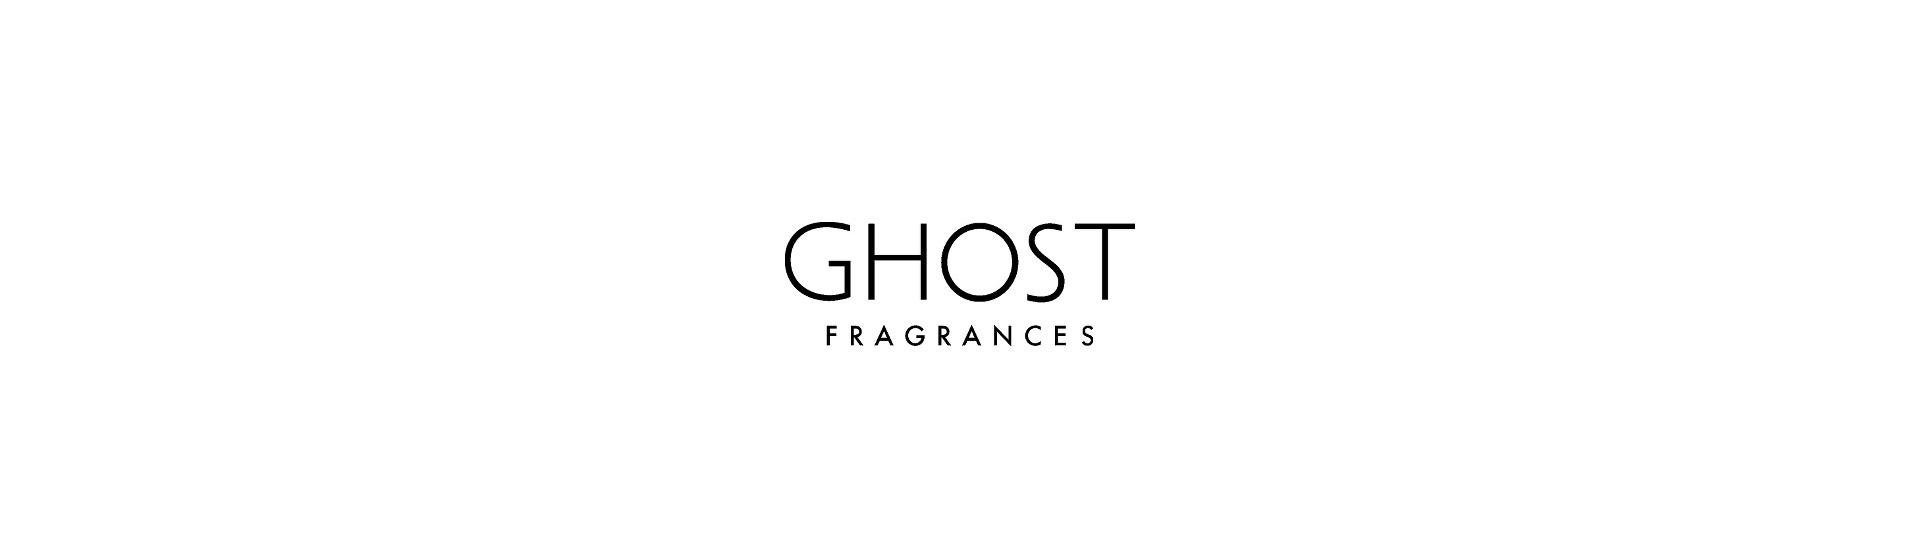 Ghost Fragrances